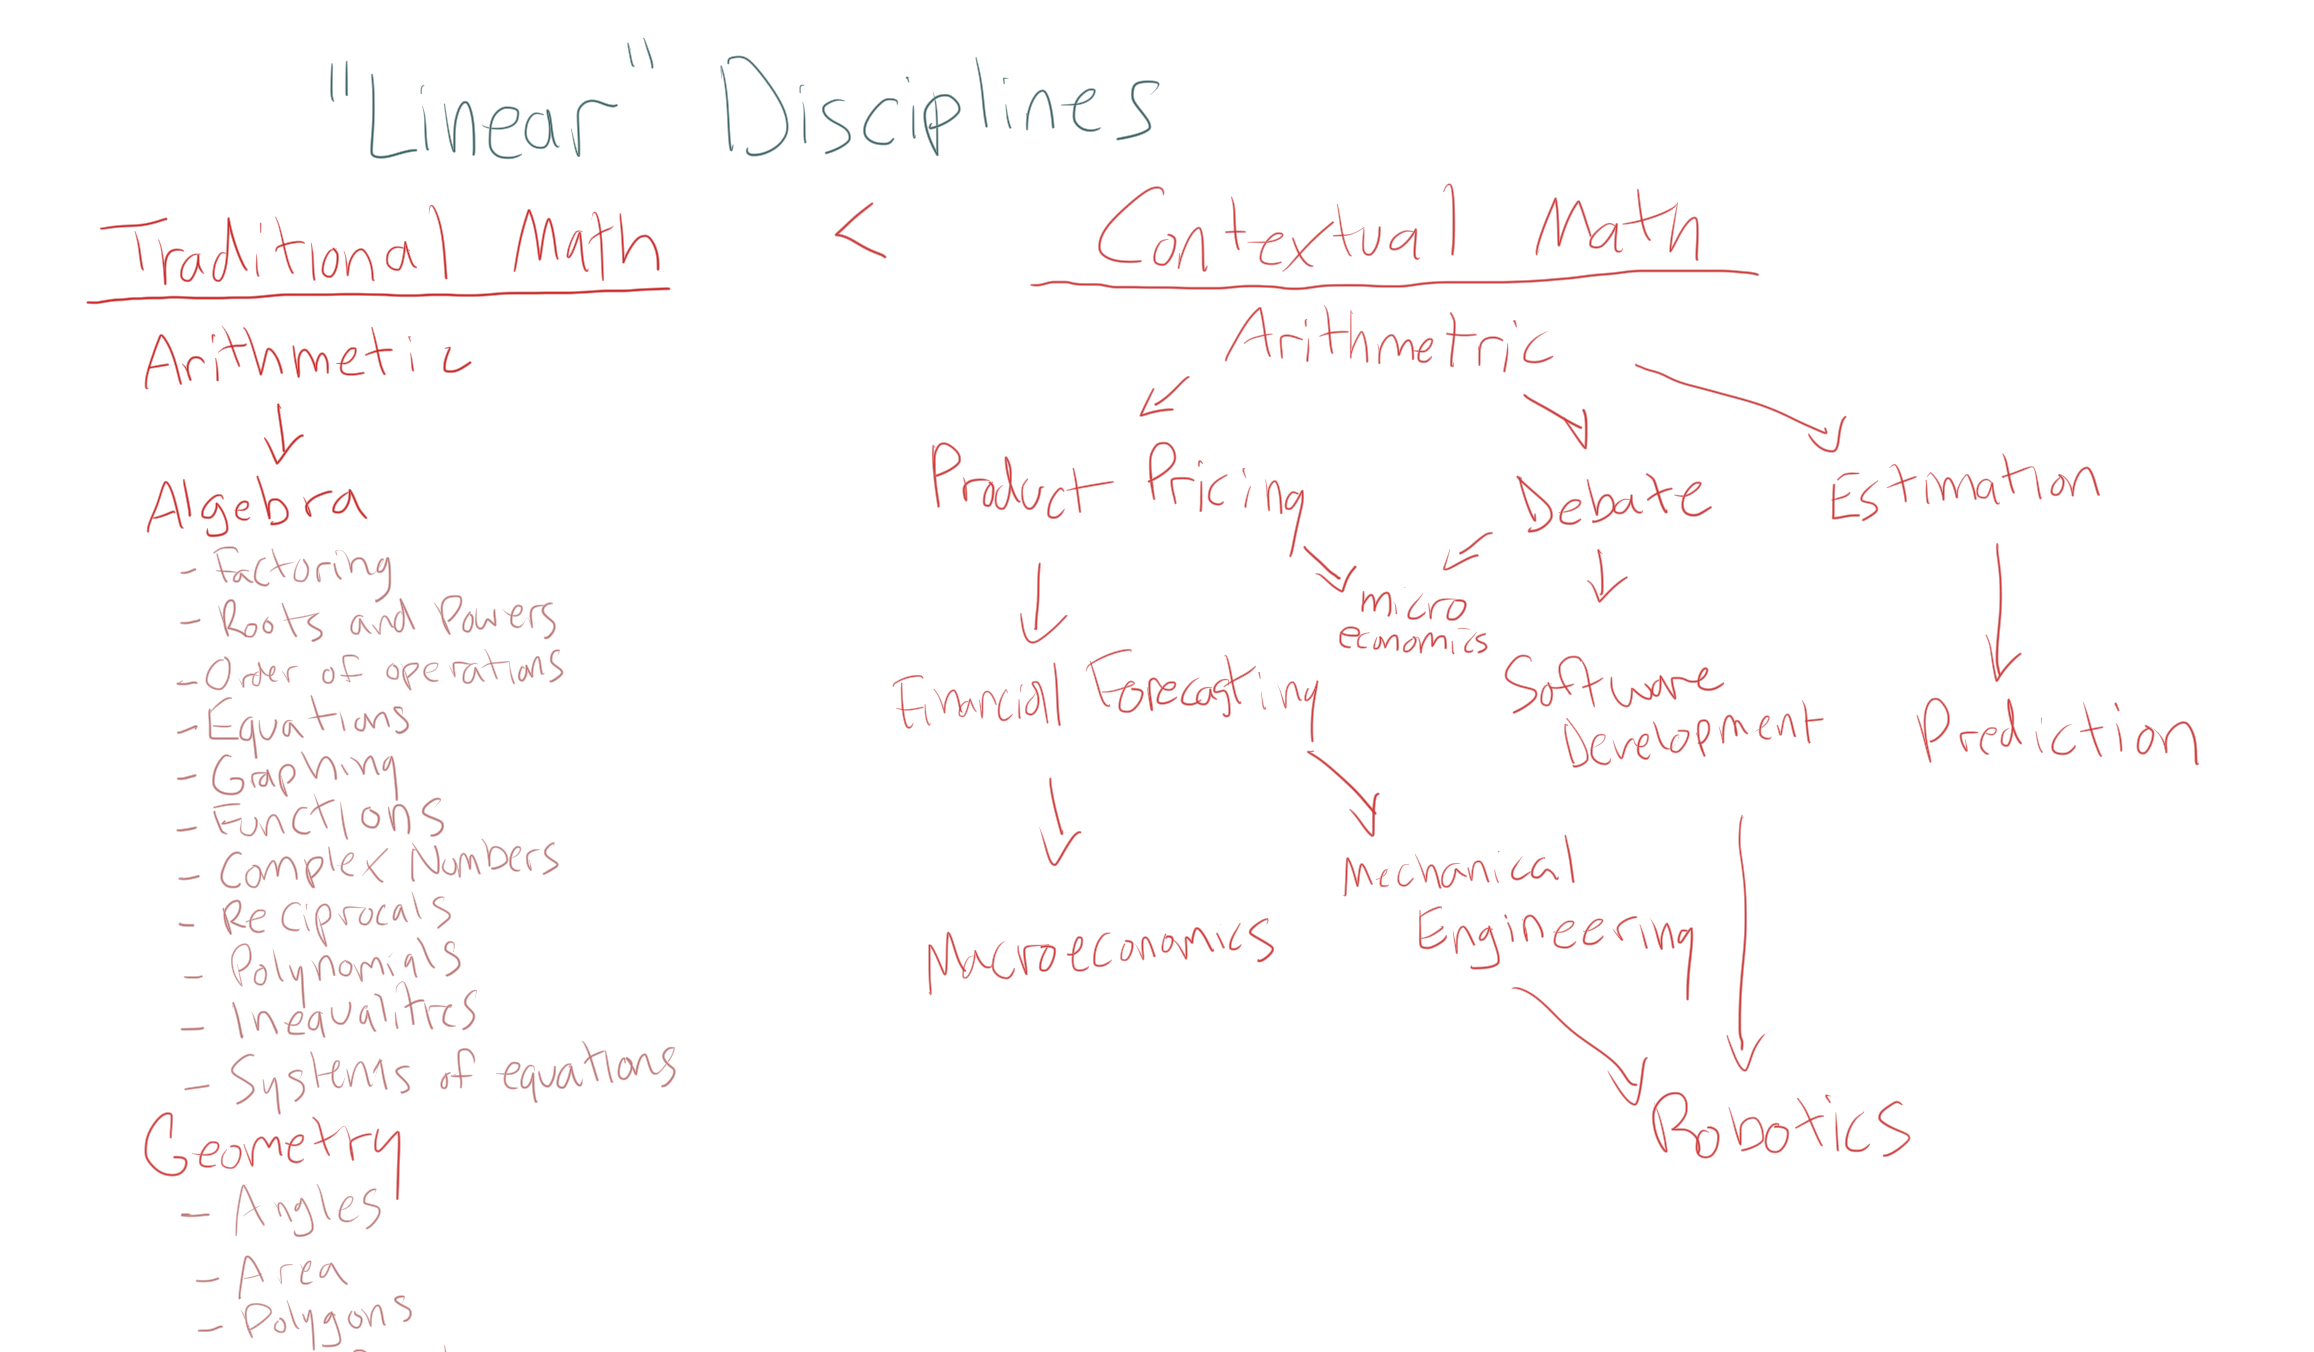 Linear disciplines